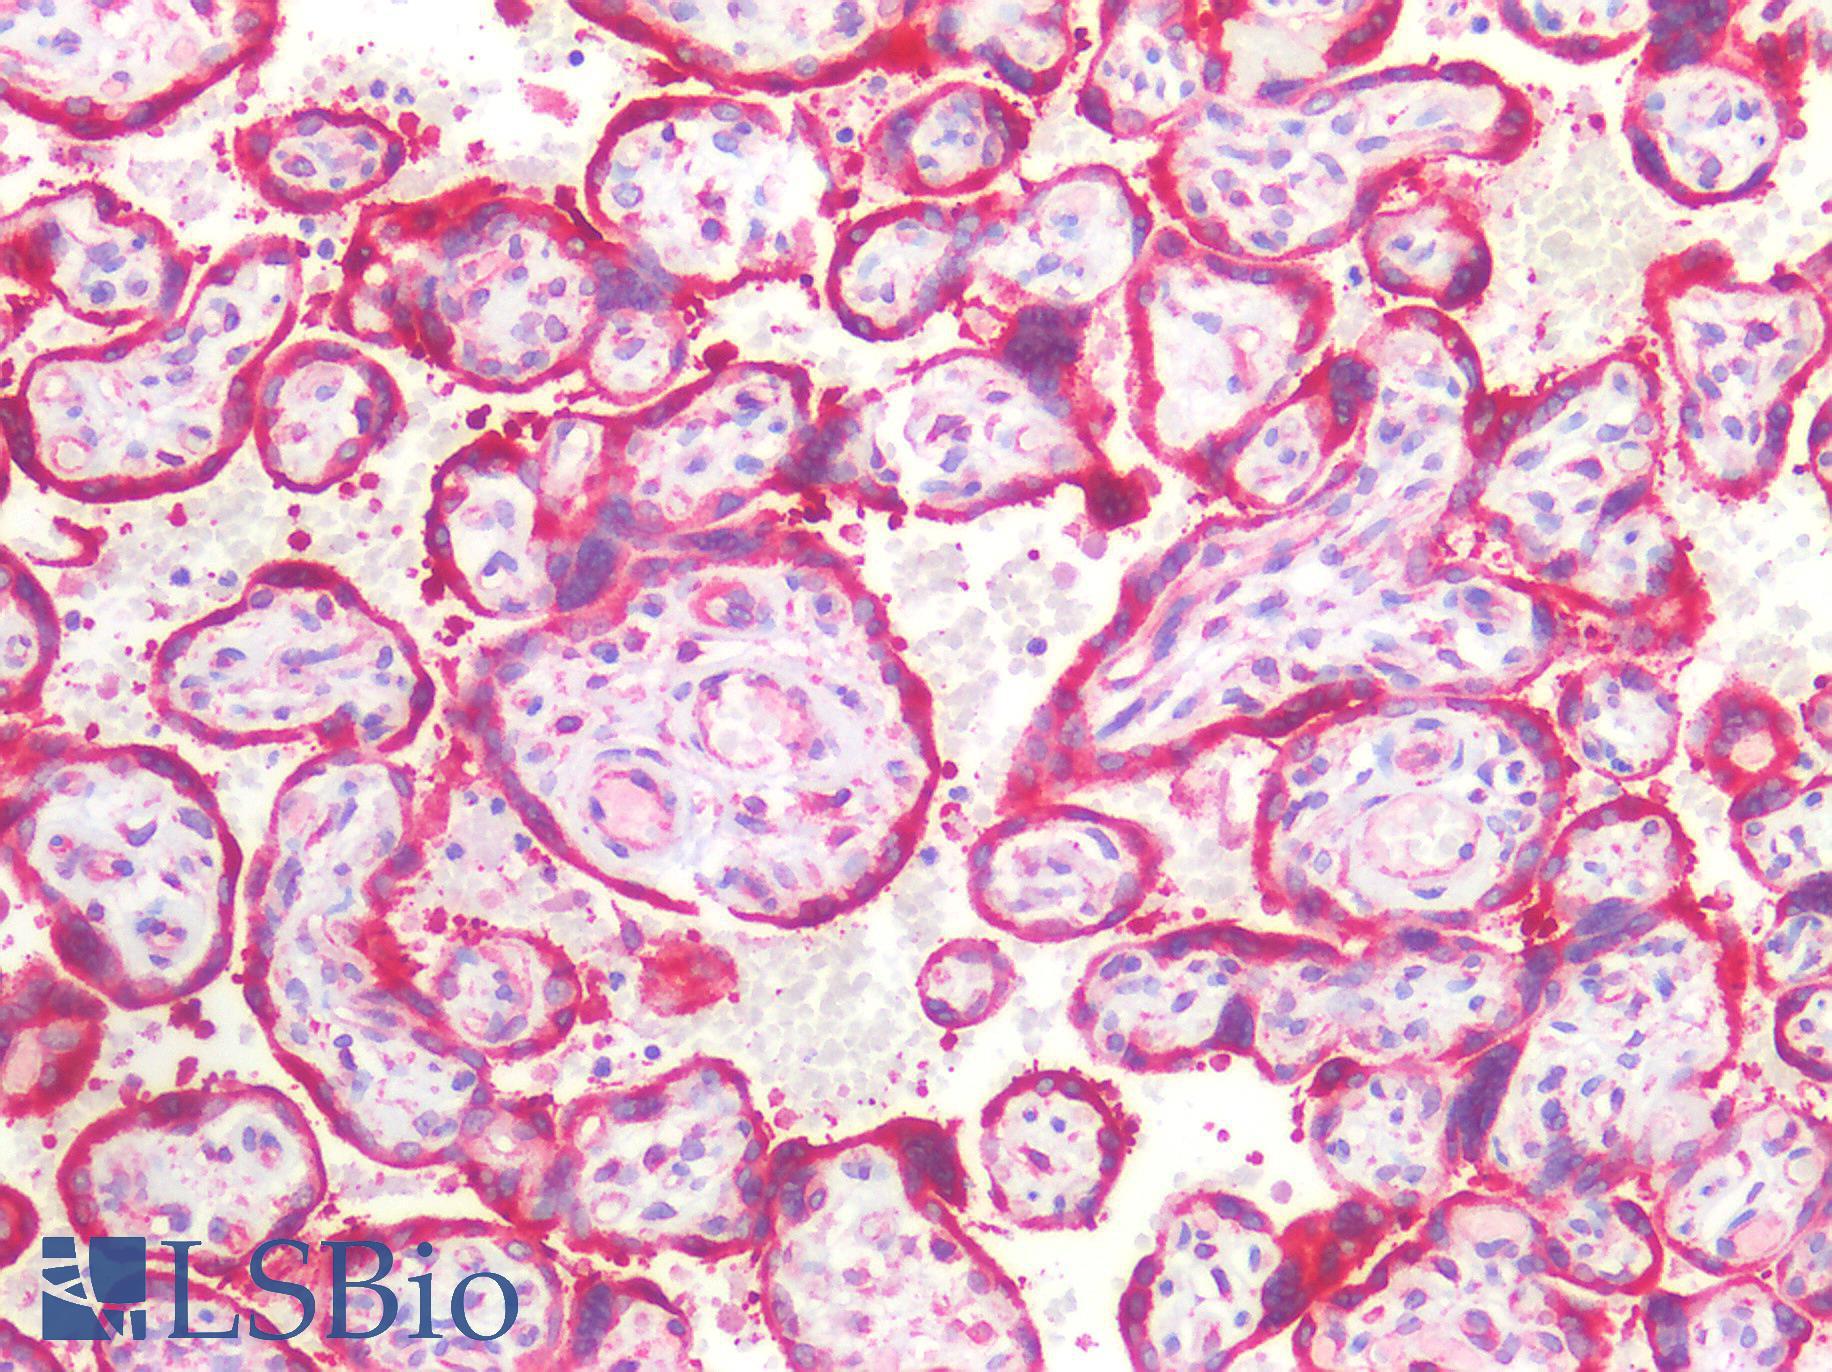 SEL1L Antibody - Human Placenta: Formalin-Fixed, Paraffin-Embedded (FFPE)